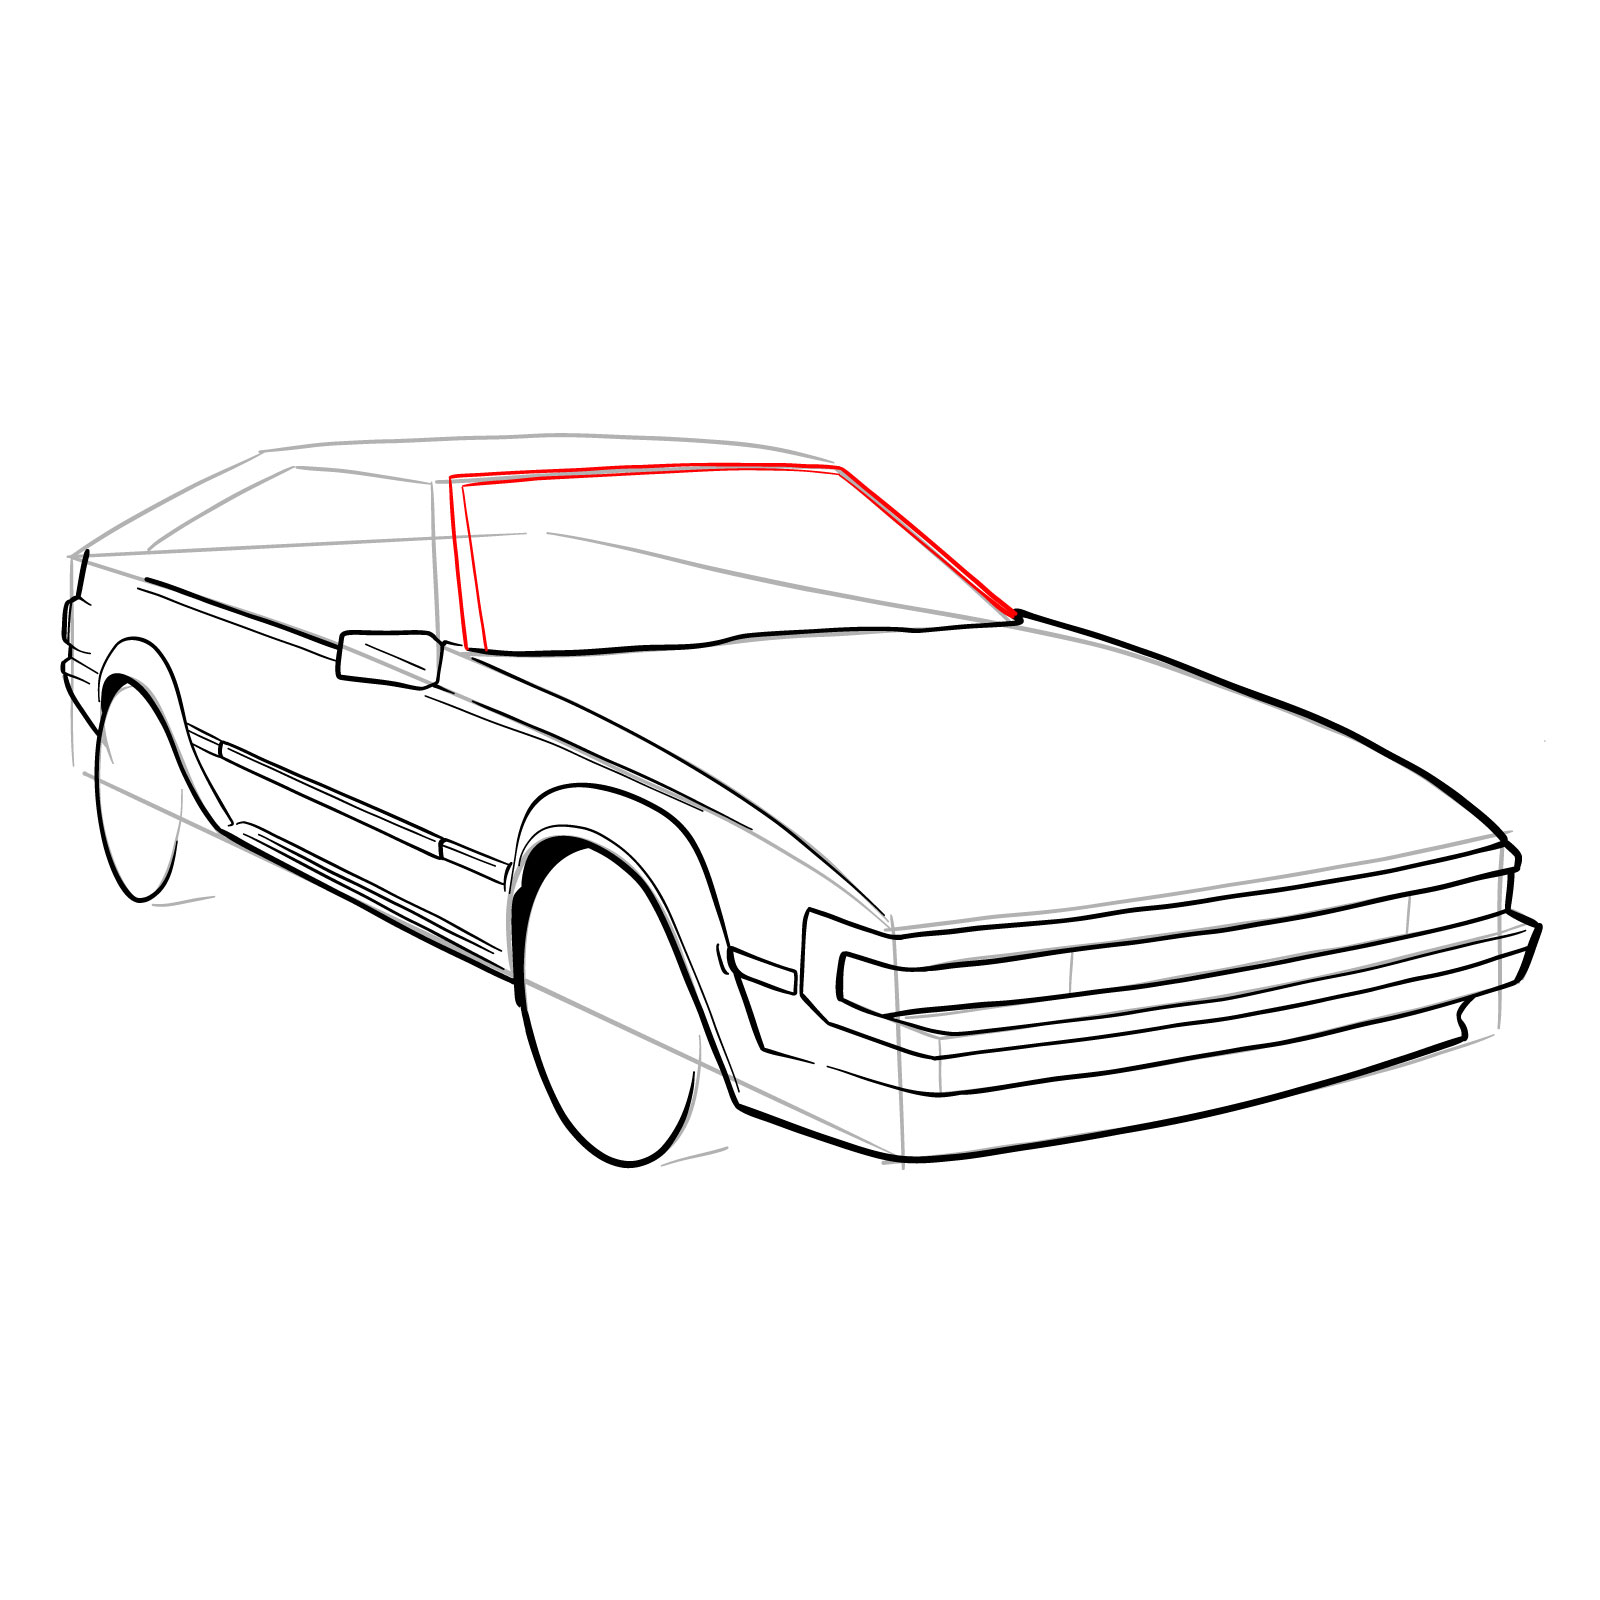 How to draw a 1985 Toyota Celica Supra P Type MK 2 - step 21